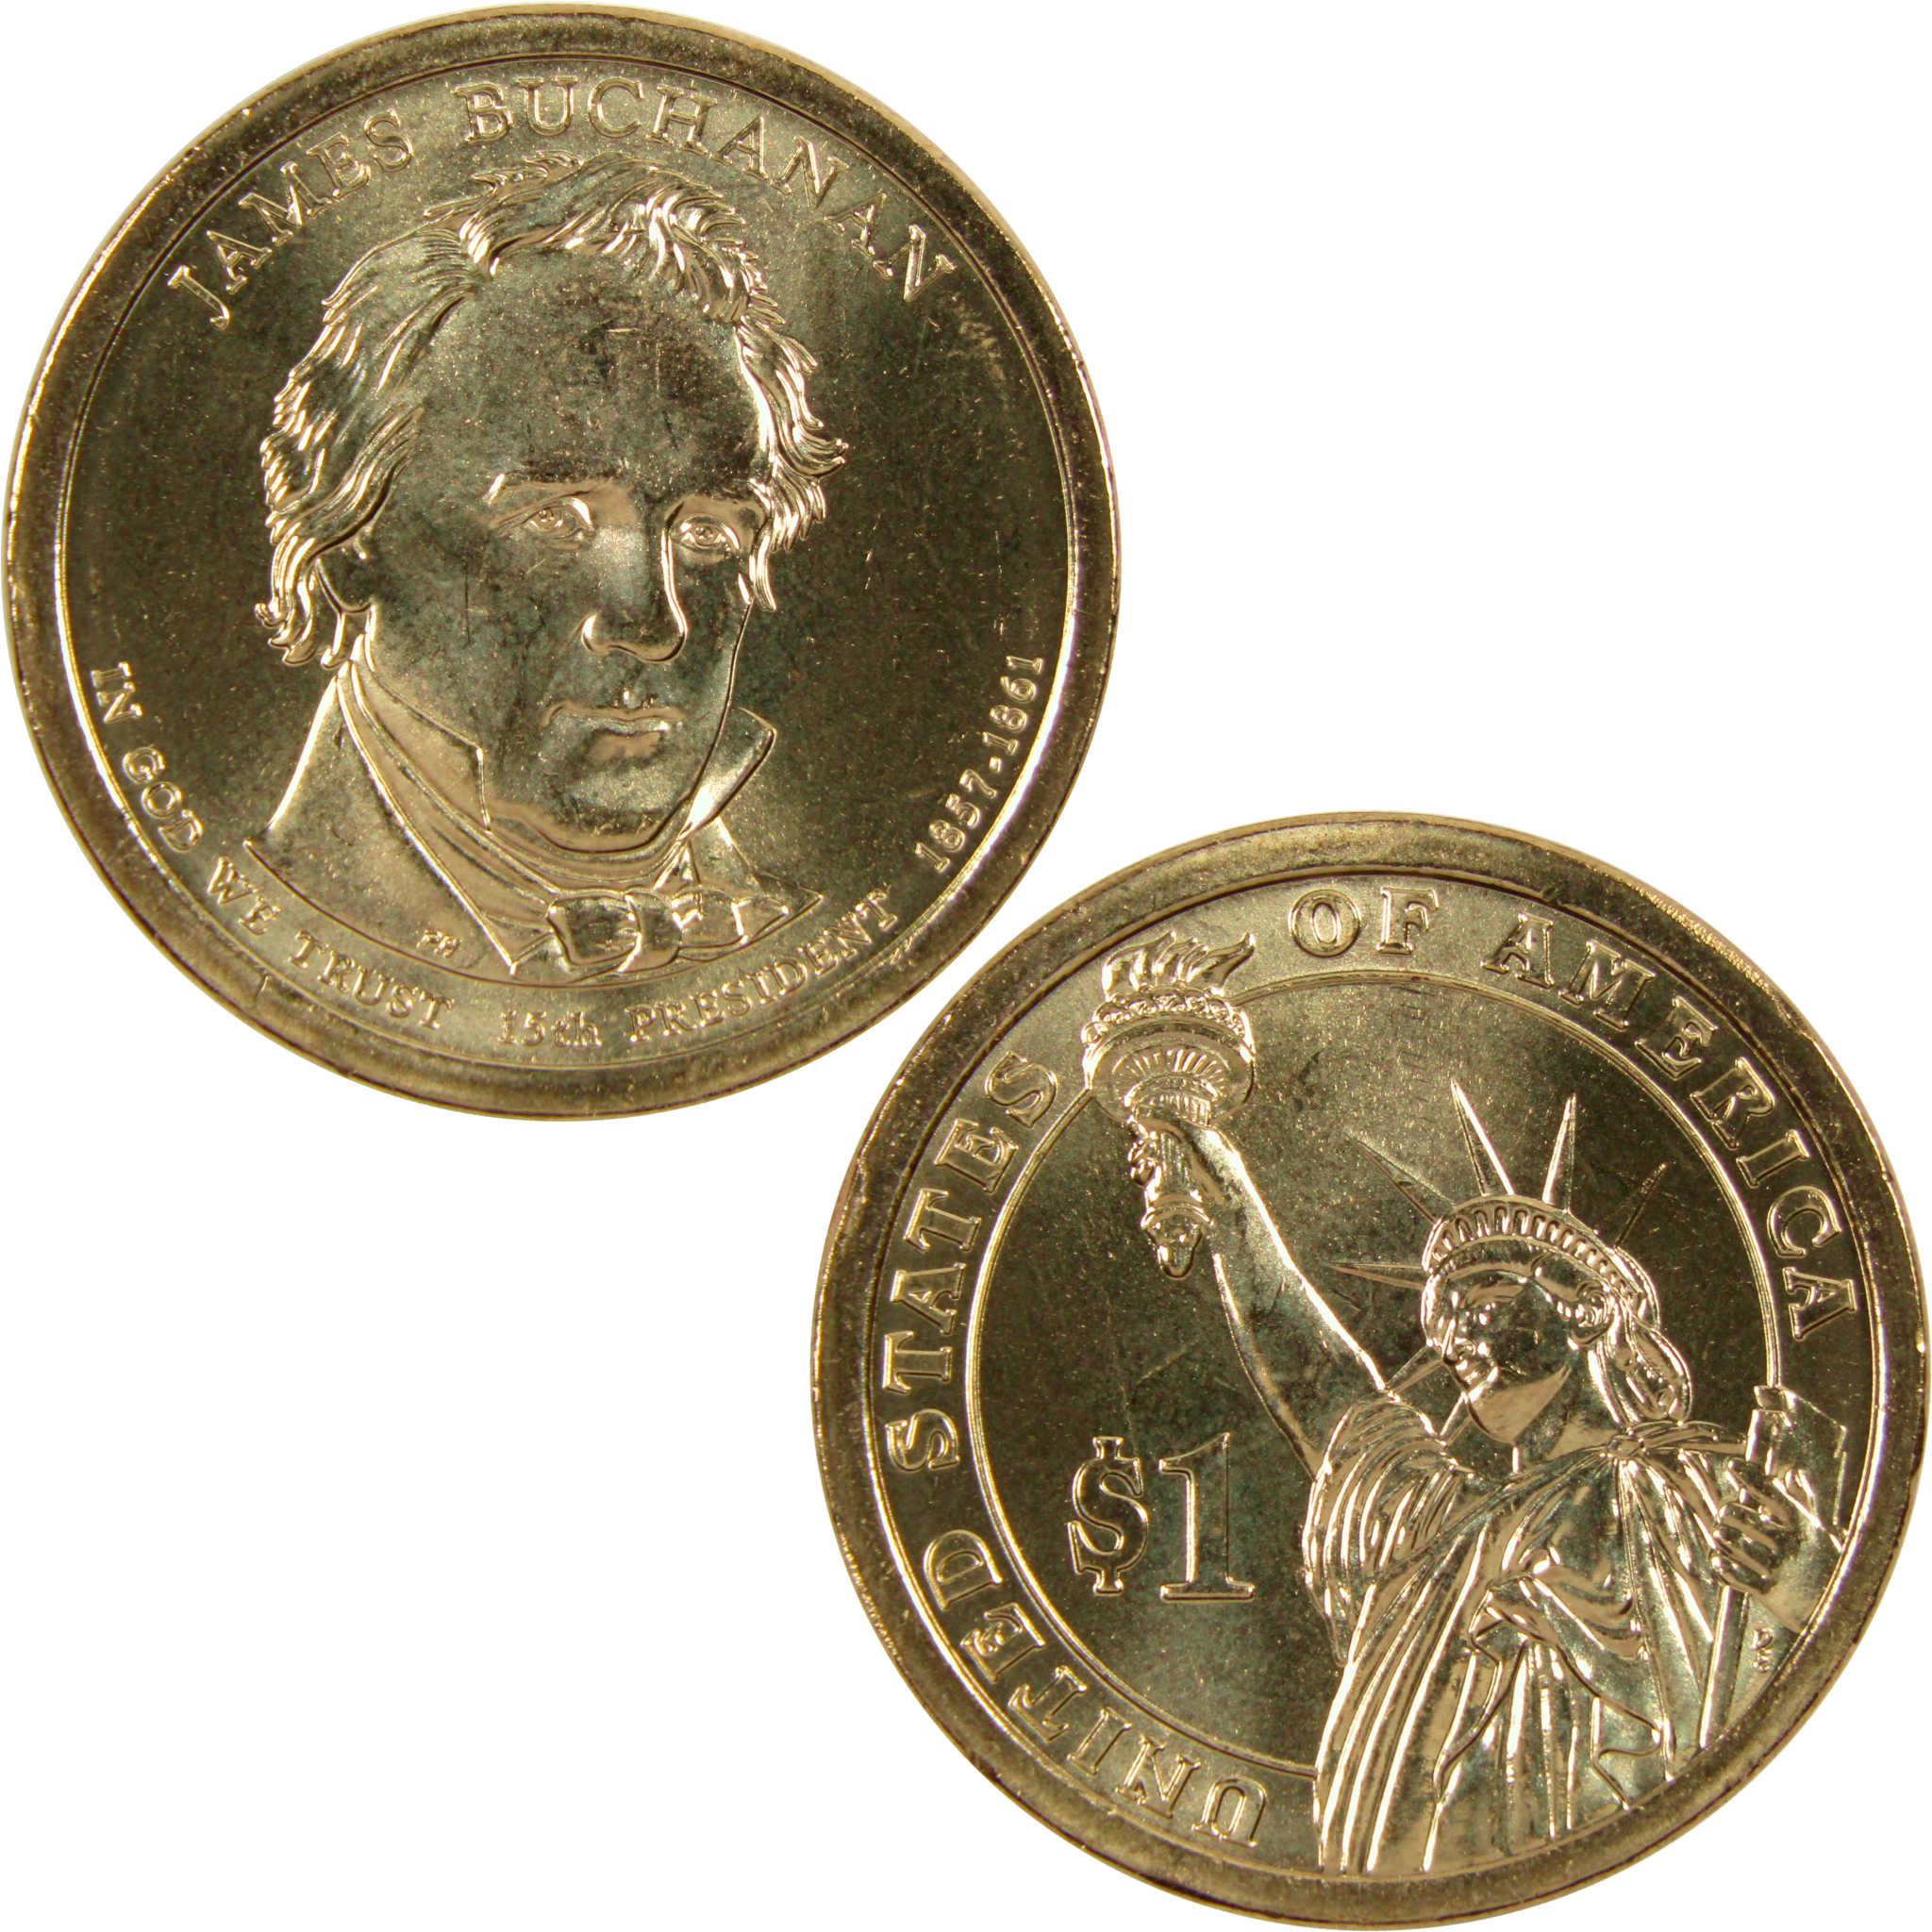 2010 P James Buchanan Presidential Dollar BU Uncirculated $1 Coin